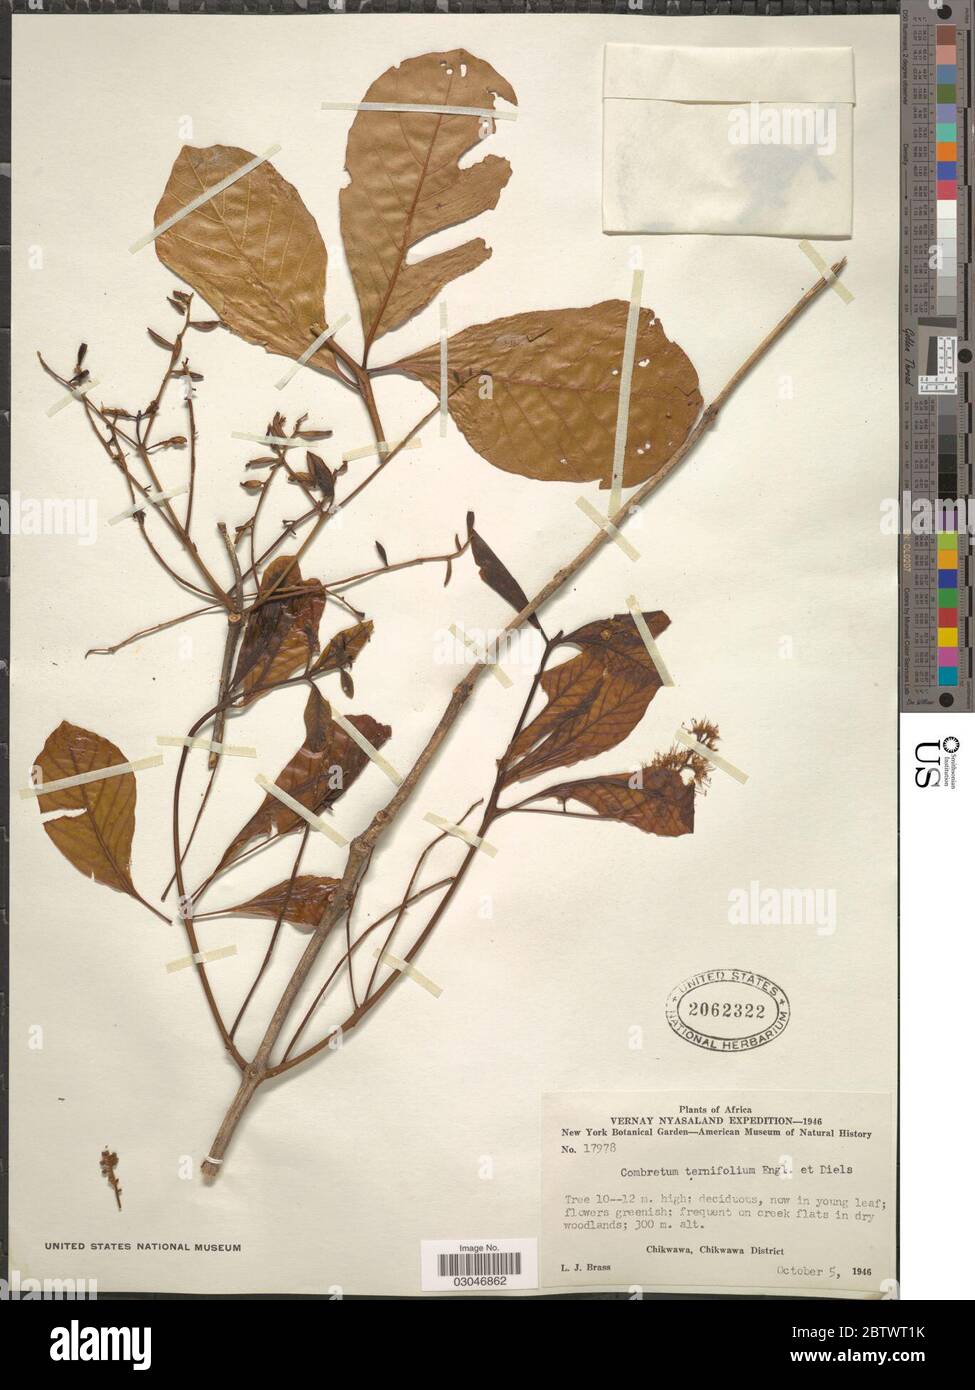 Combretum ternifolium Engl Diels. Stock Photo